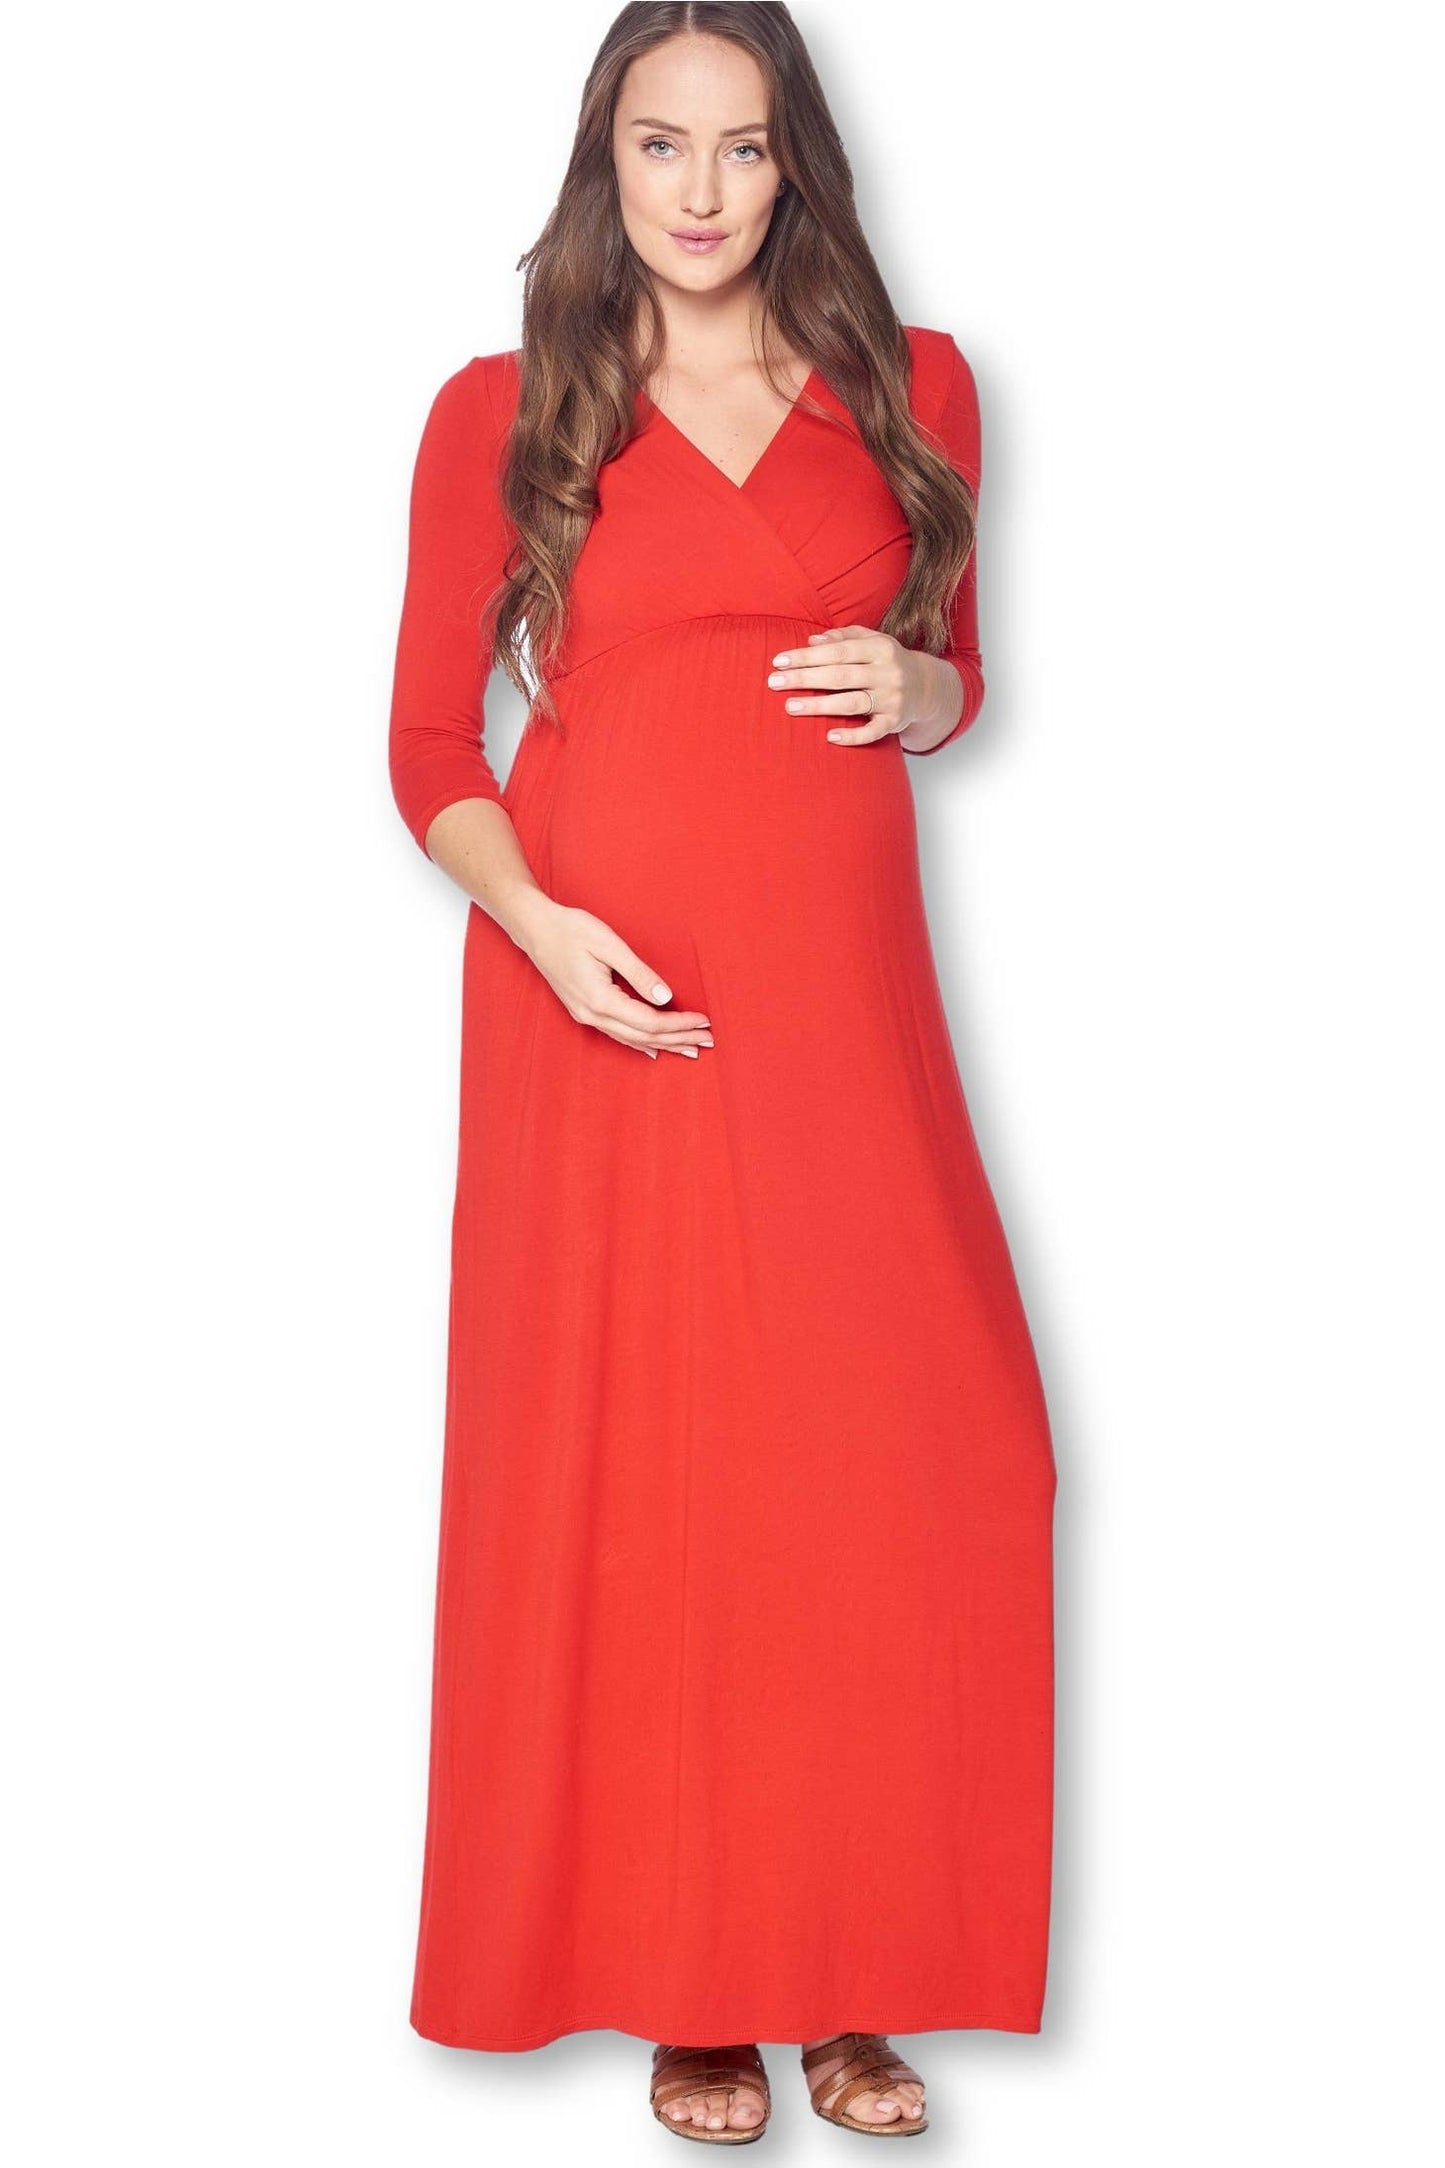 Orange/Red Maternity Dress